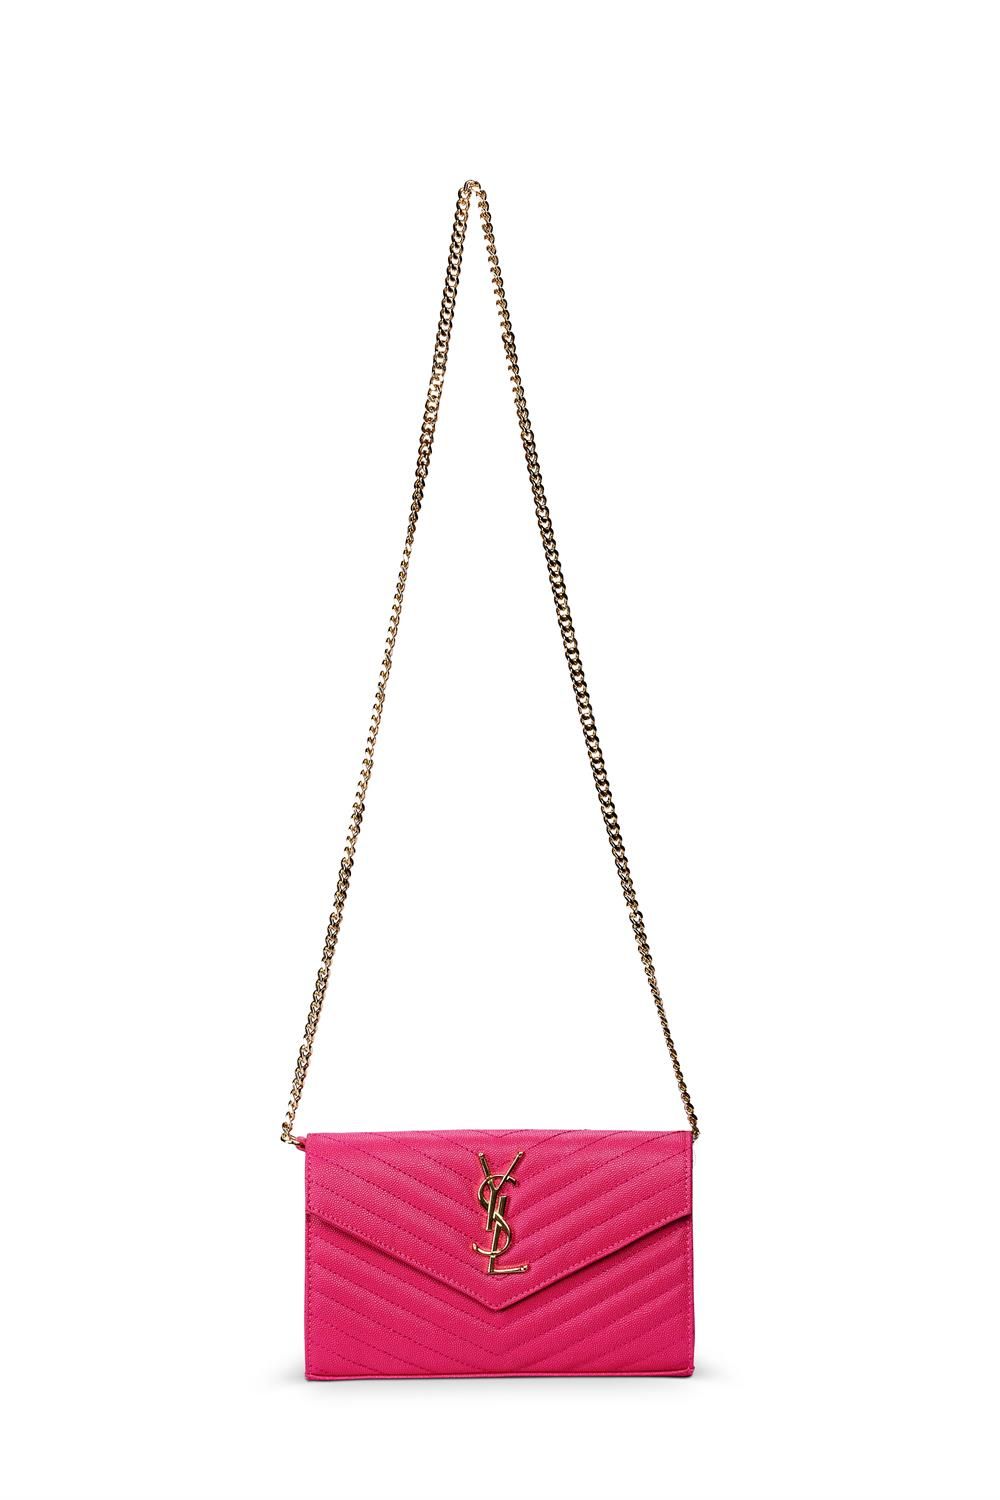 Yves Saint Laurent, a pink leather chevron clutch bag 伊夫-圣洛朗，粉色皮质雪佛兰手拿包，可拆卸链条肩带，&hellip;